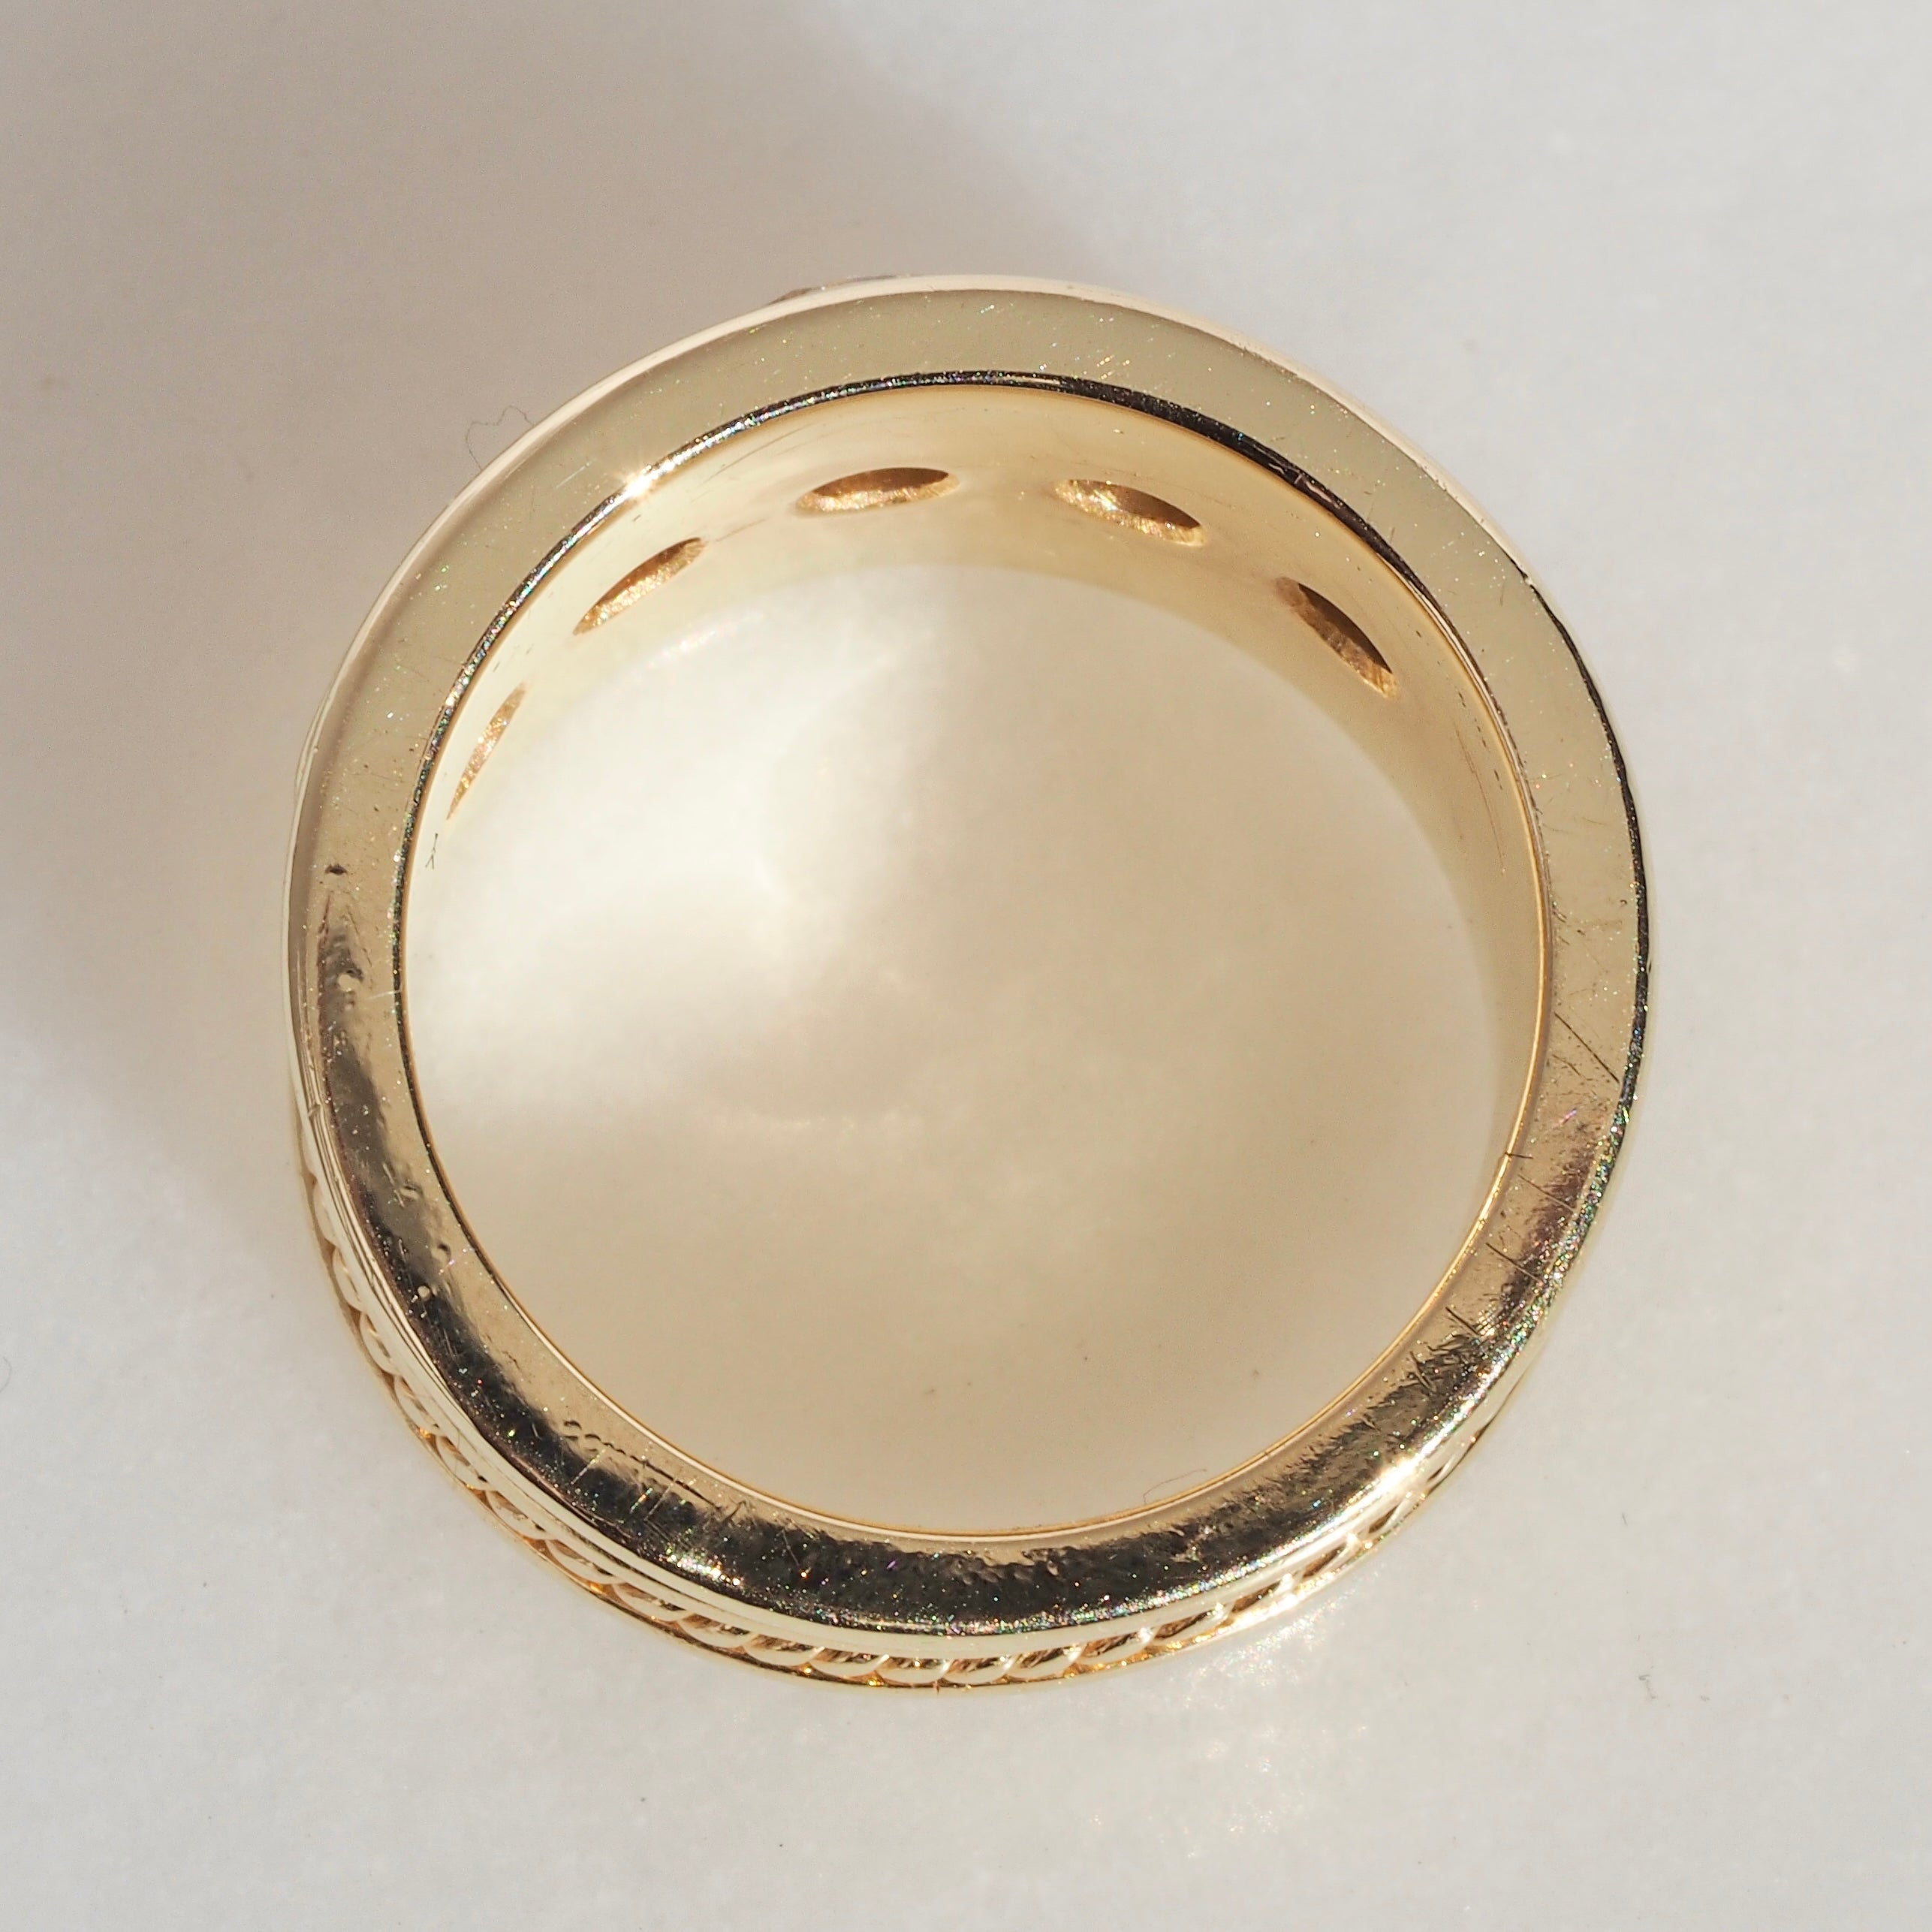 Vintage Byzantine Revival 18k Gold Five Stone Diamond Ring